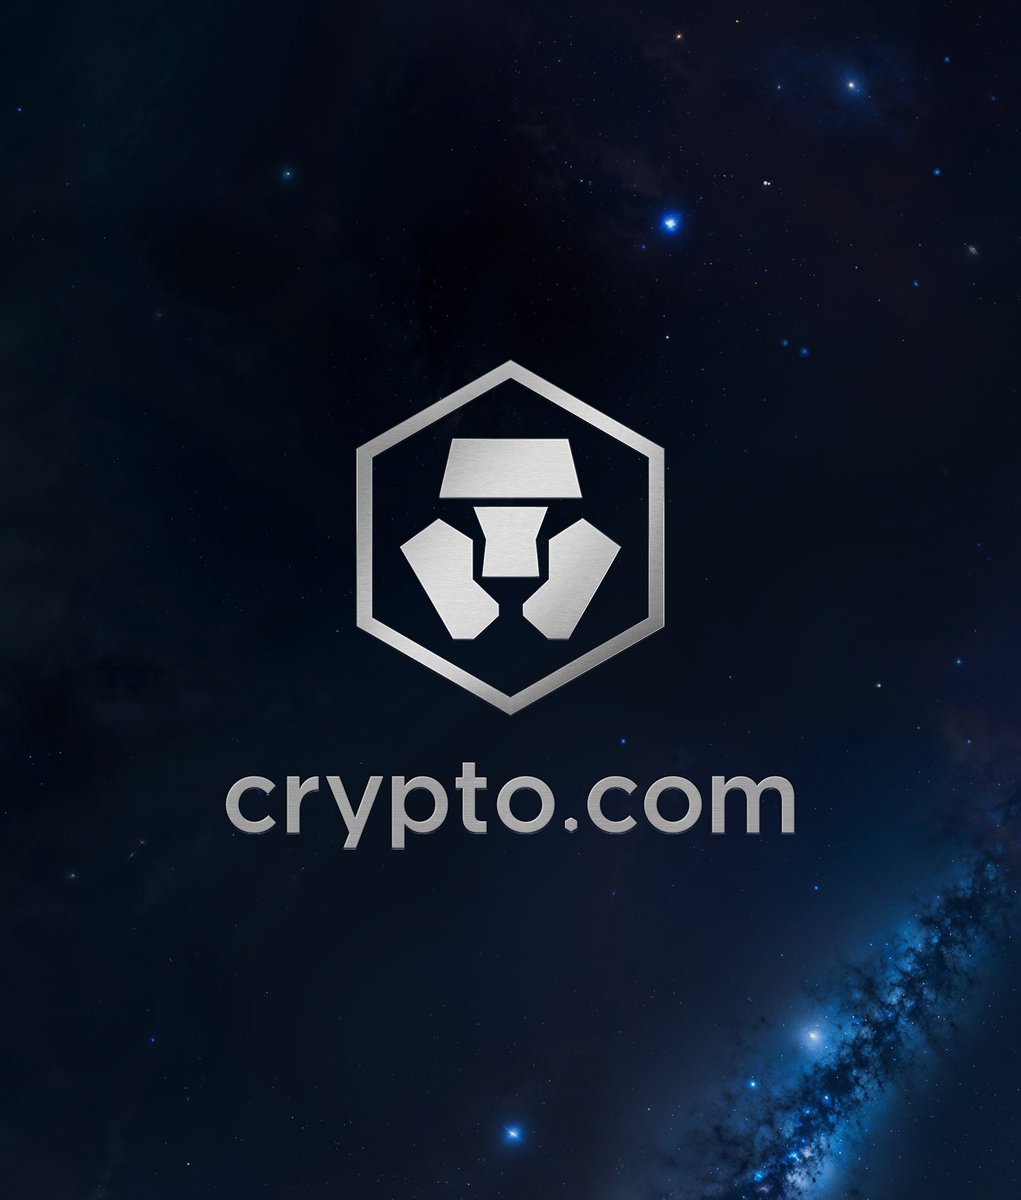 🚨 REMINDER 🚨 the leader in regulatory compliance - #cryptocom 🥇🔥 the world’s premier crypto trading platform - #cryptocom 🌏📍 #crofam #bornbrave #FFTB